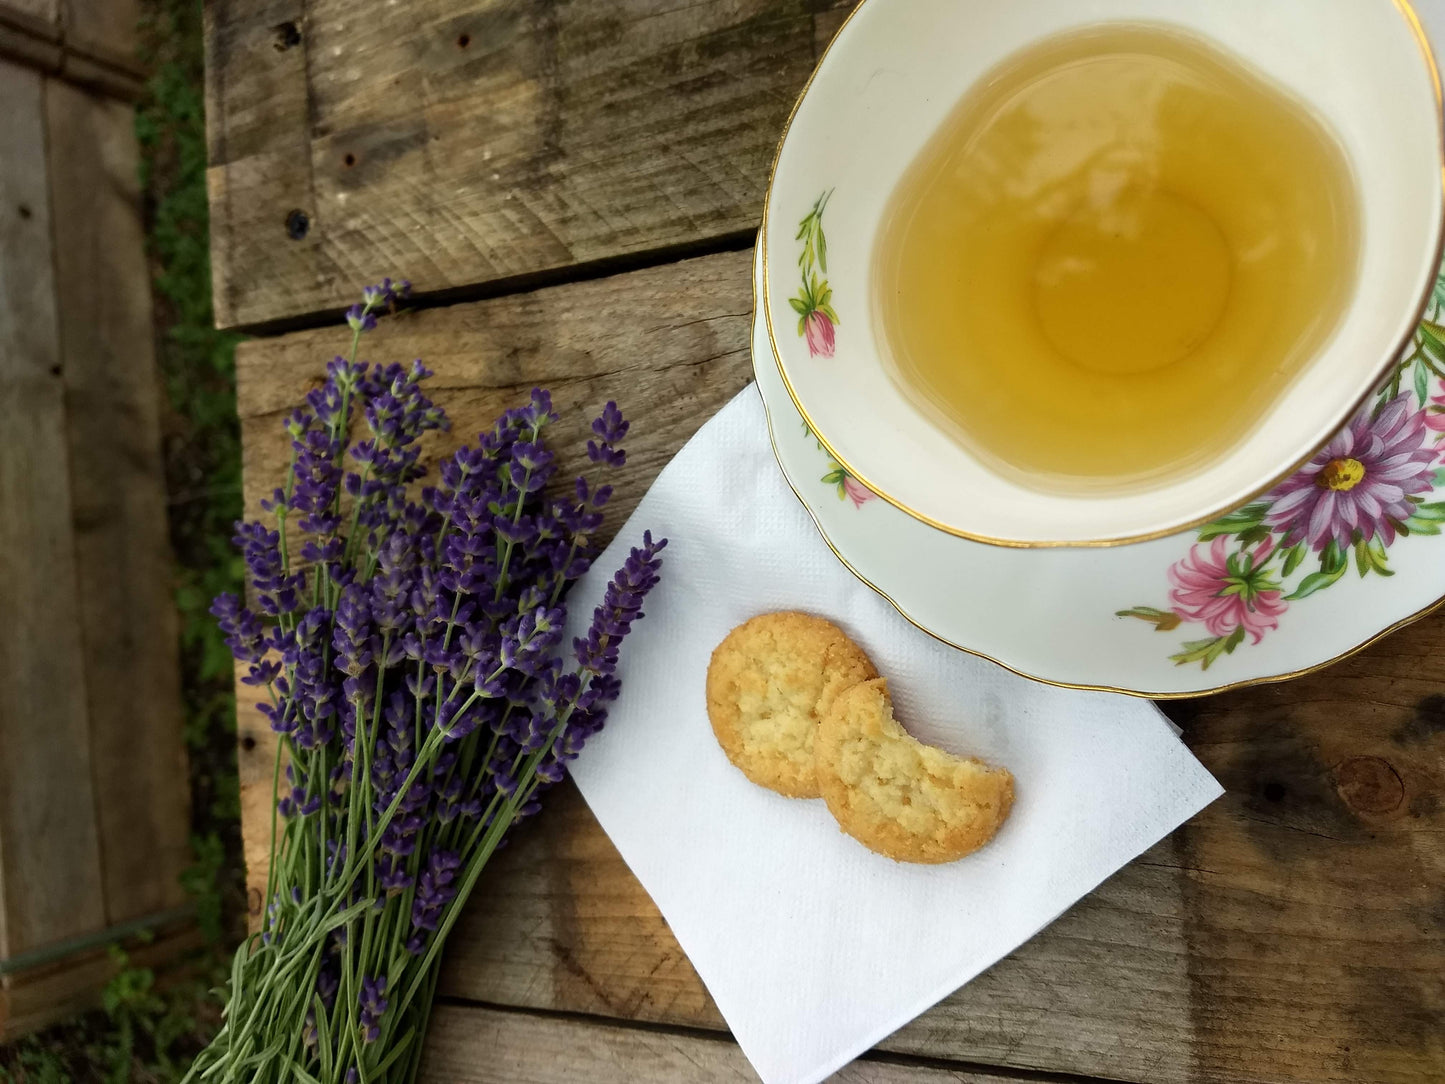 Dreamtime Loose Herbal Tea, lavender, chamomile, no caffeine